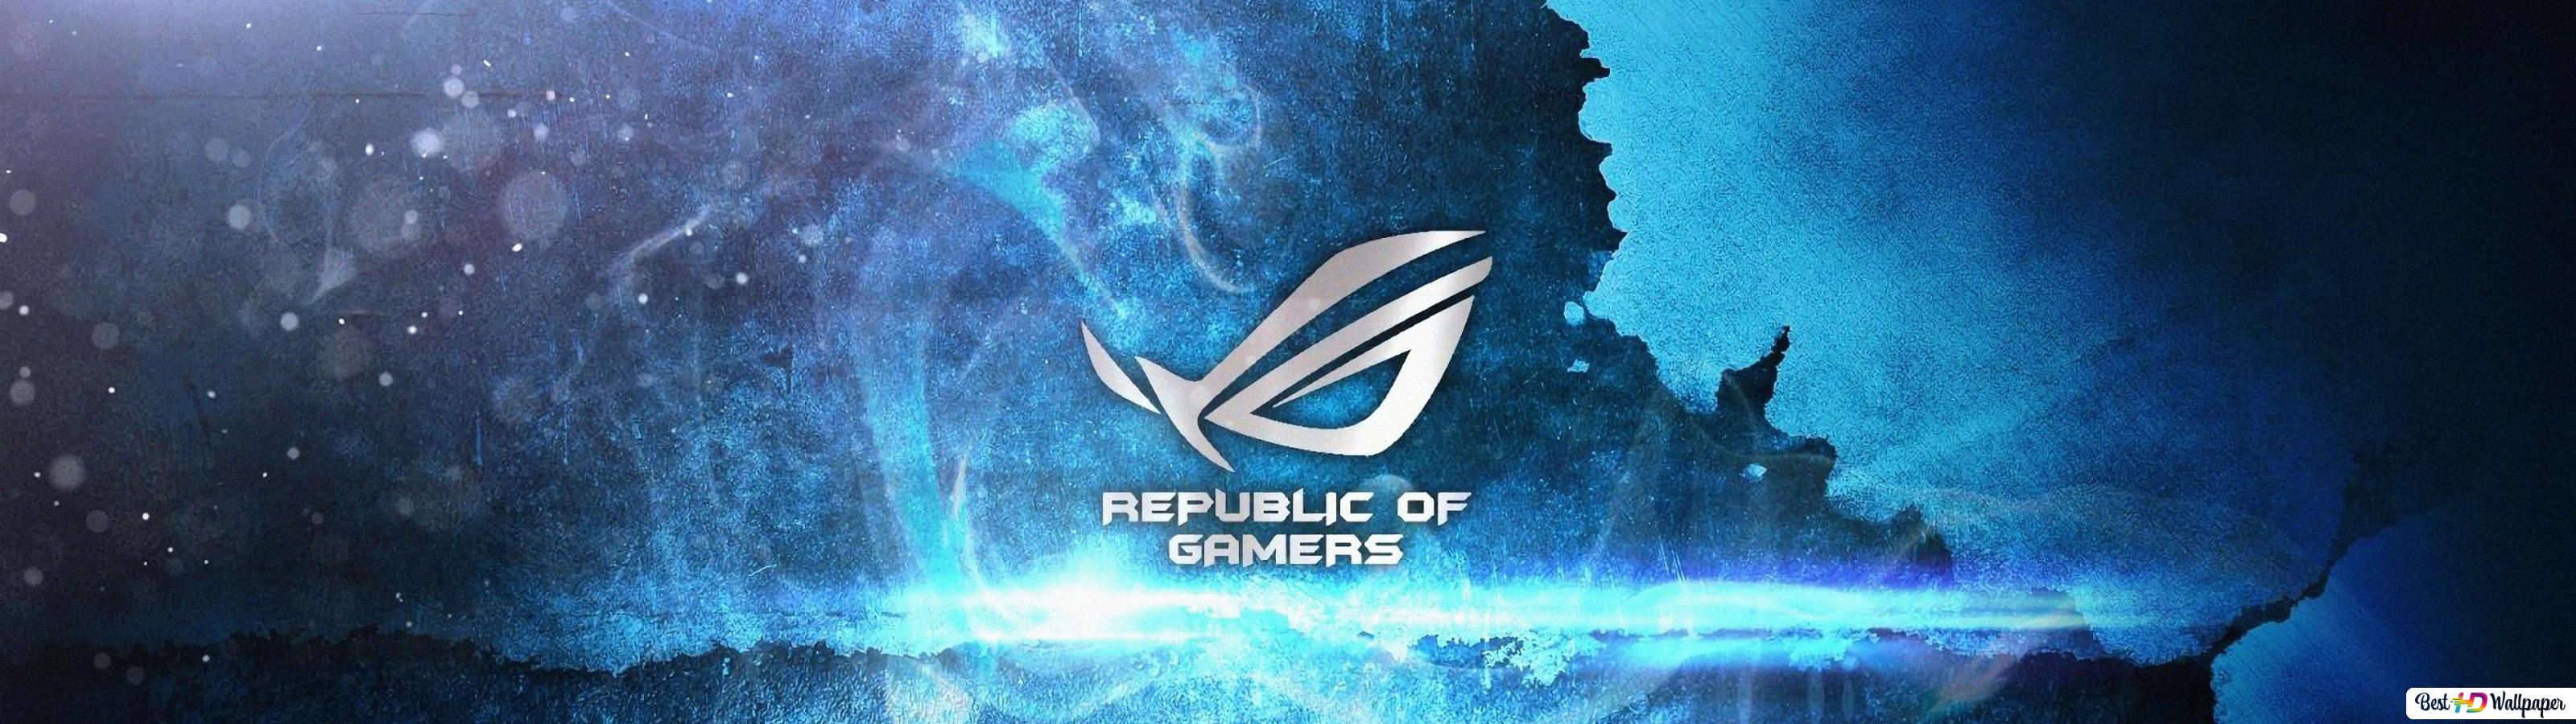 ASUS ROG (Republic of Gamers) Blue HD wallpaper download